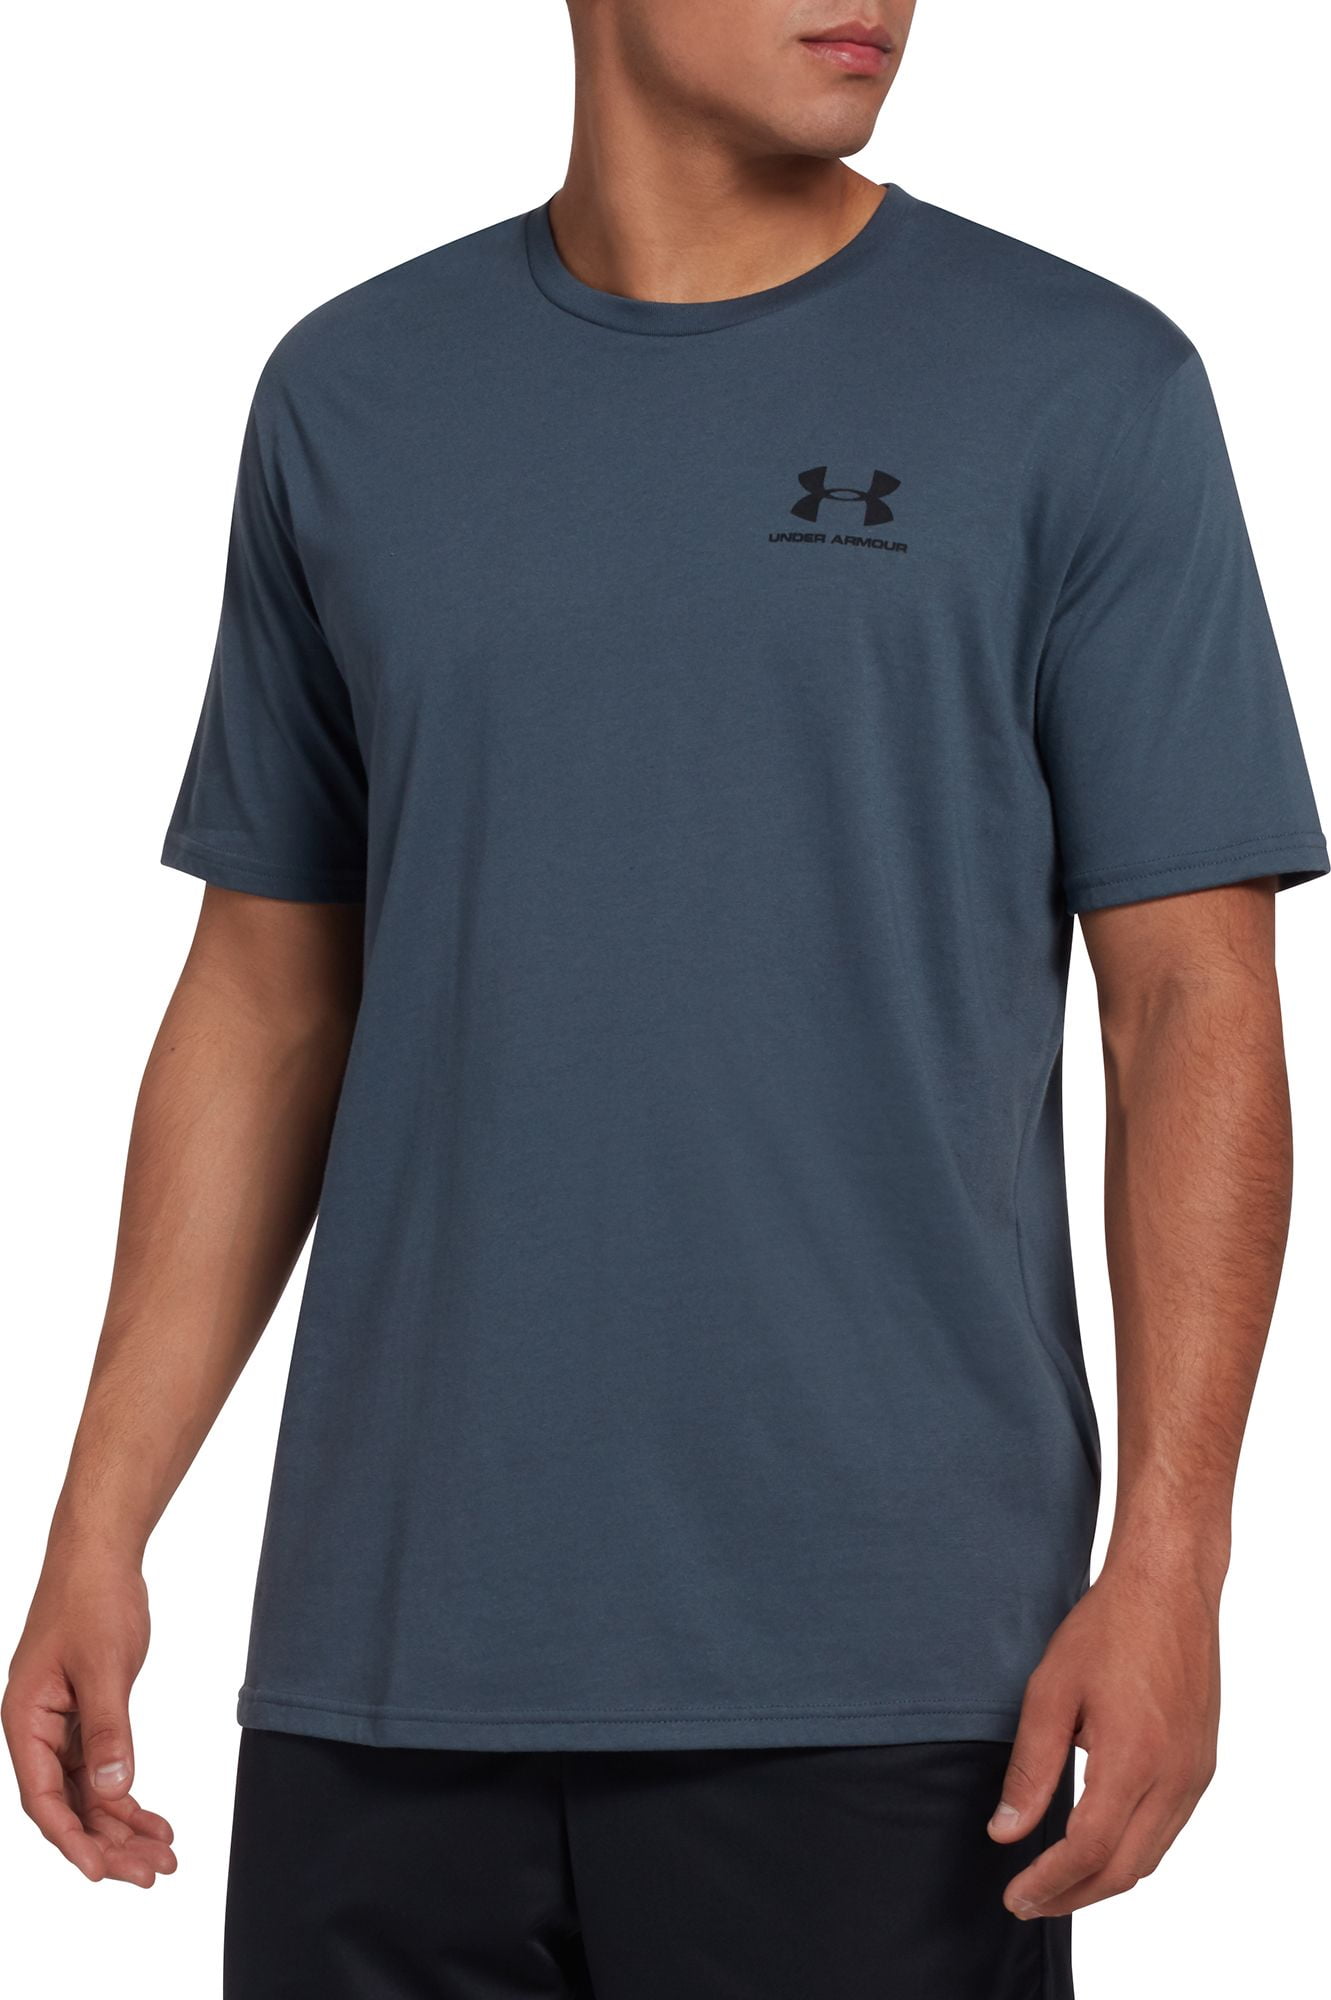 Under Armour - Under Armour Men's Sportstyle Left Chest Graphic T-Shirt ...